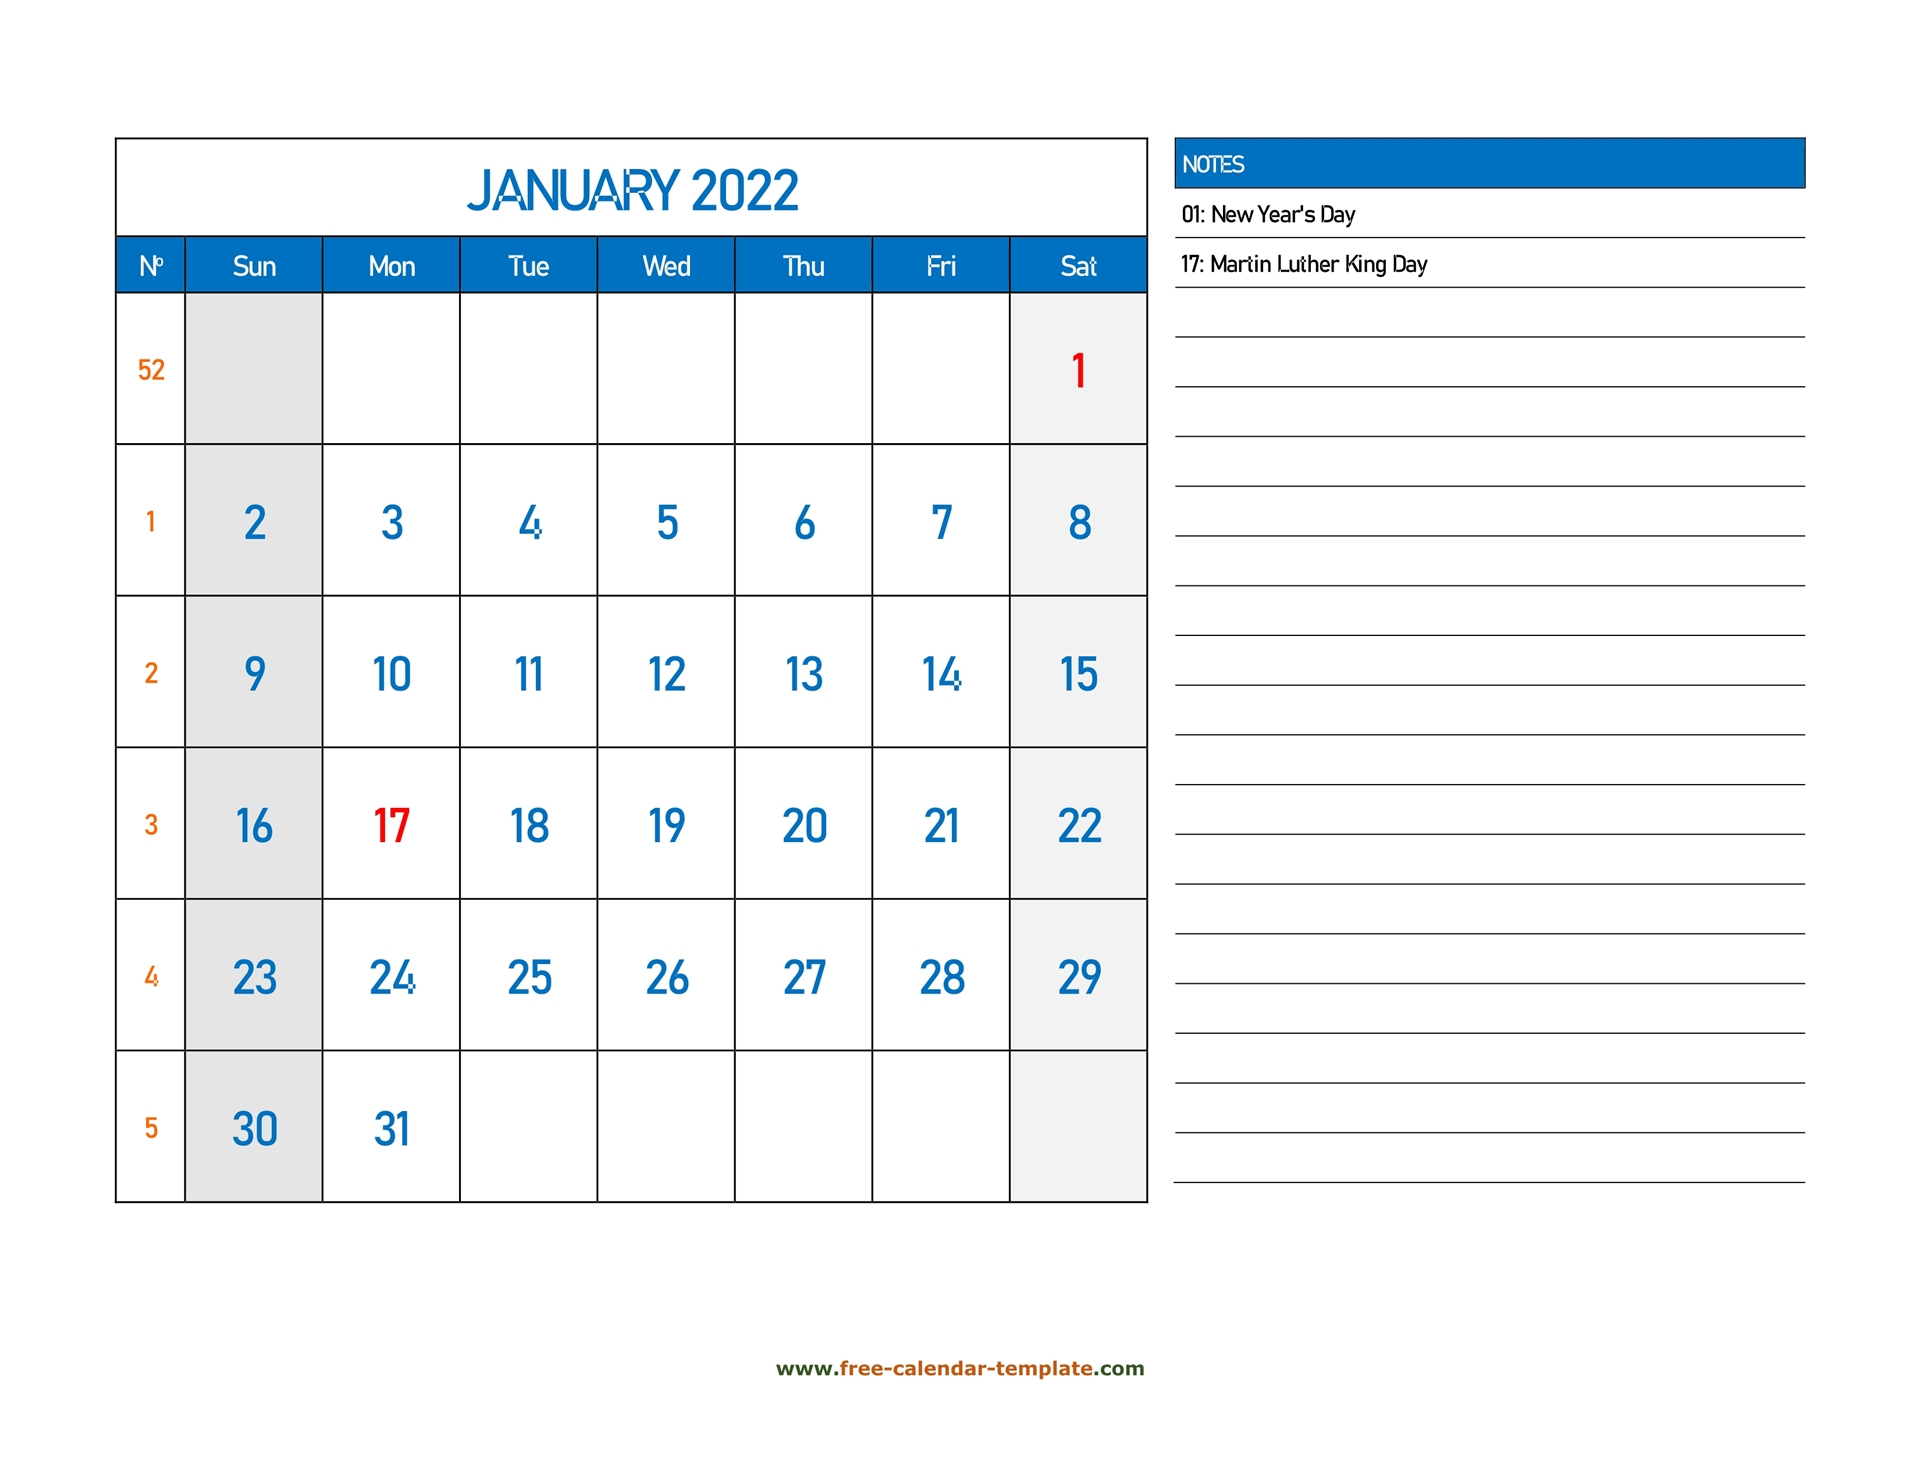 January Calendar 2022 Grid Lines For Holidays And Notes (Horizontal) | Free-Calendar-Template